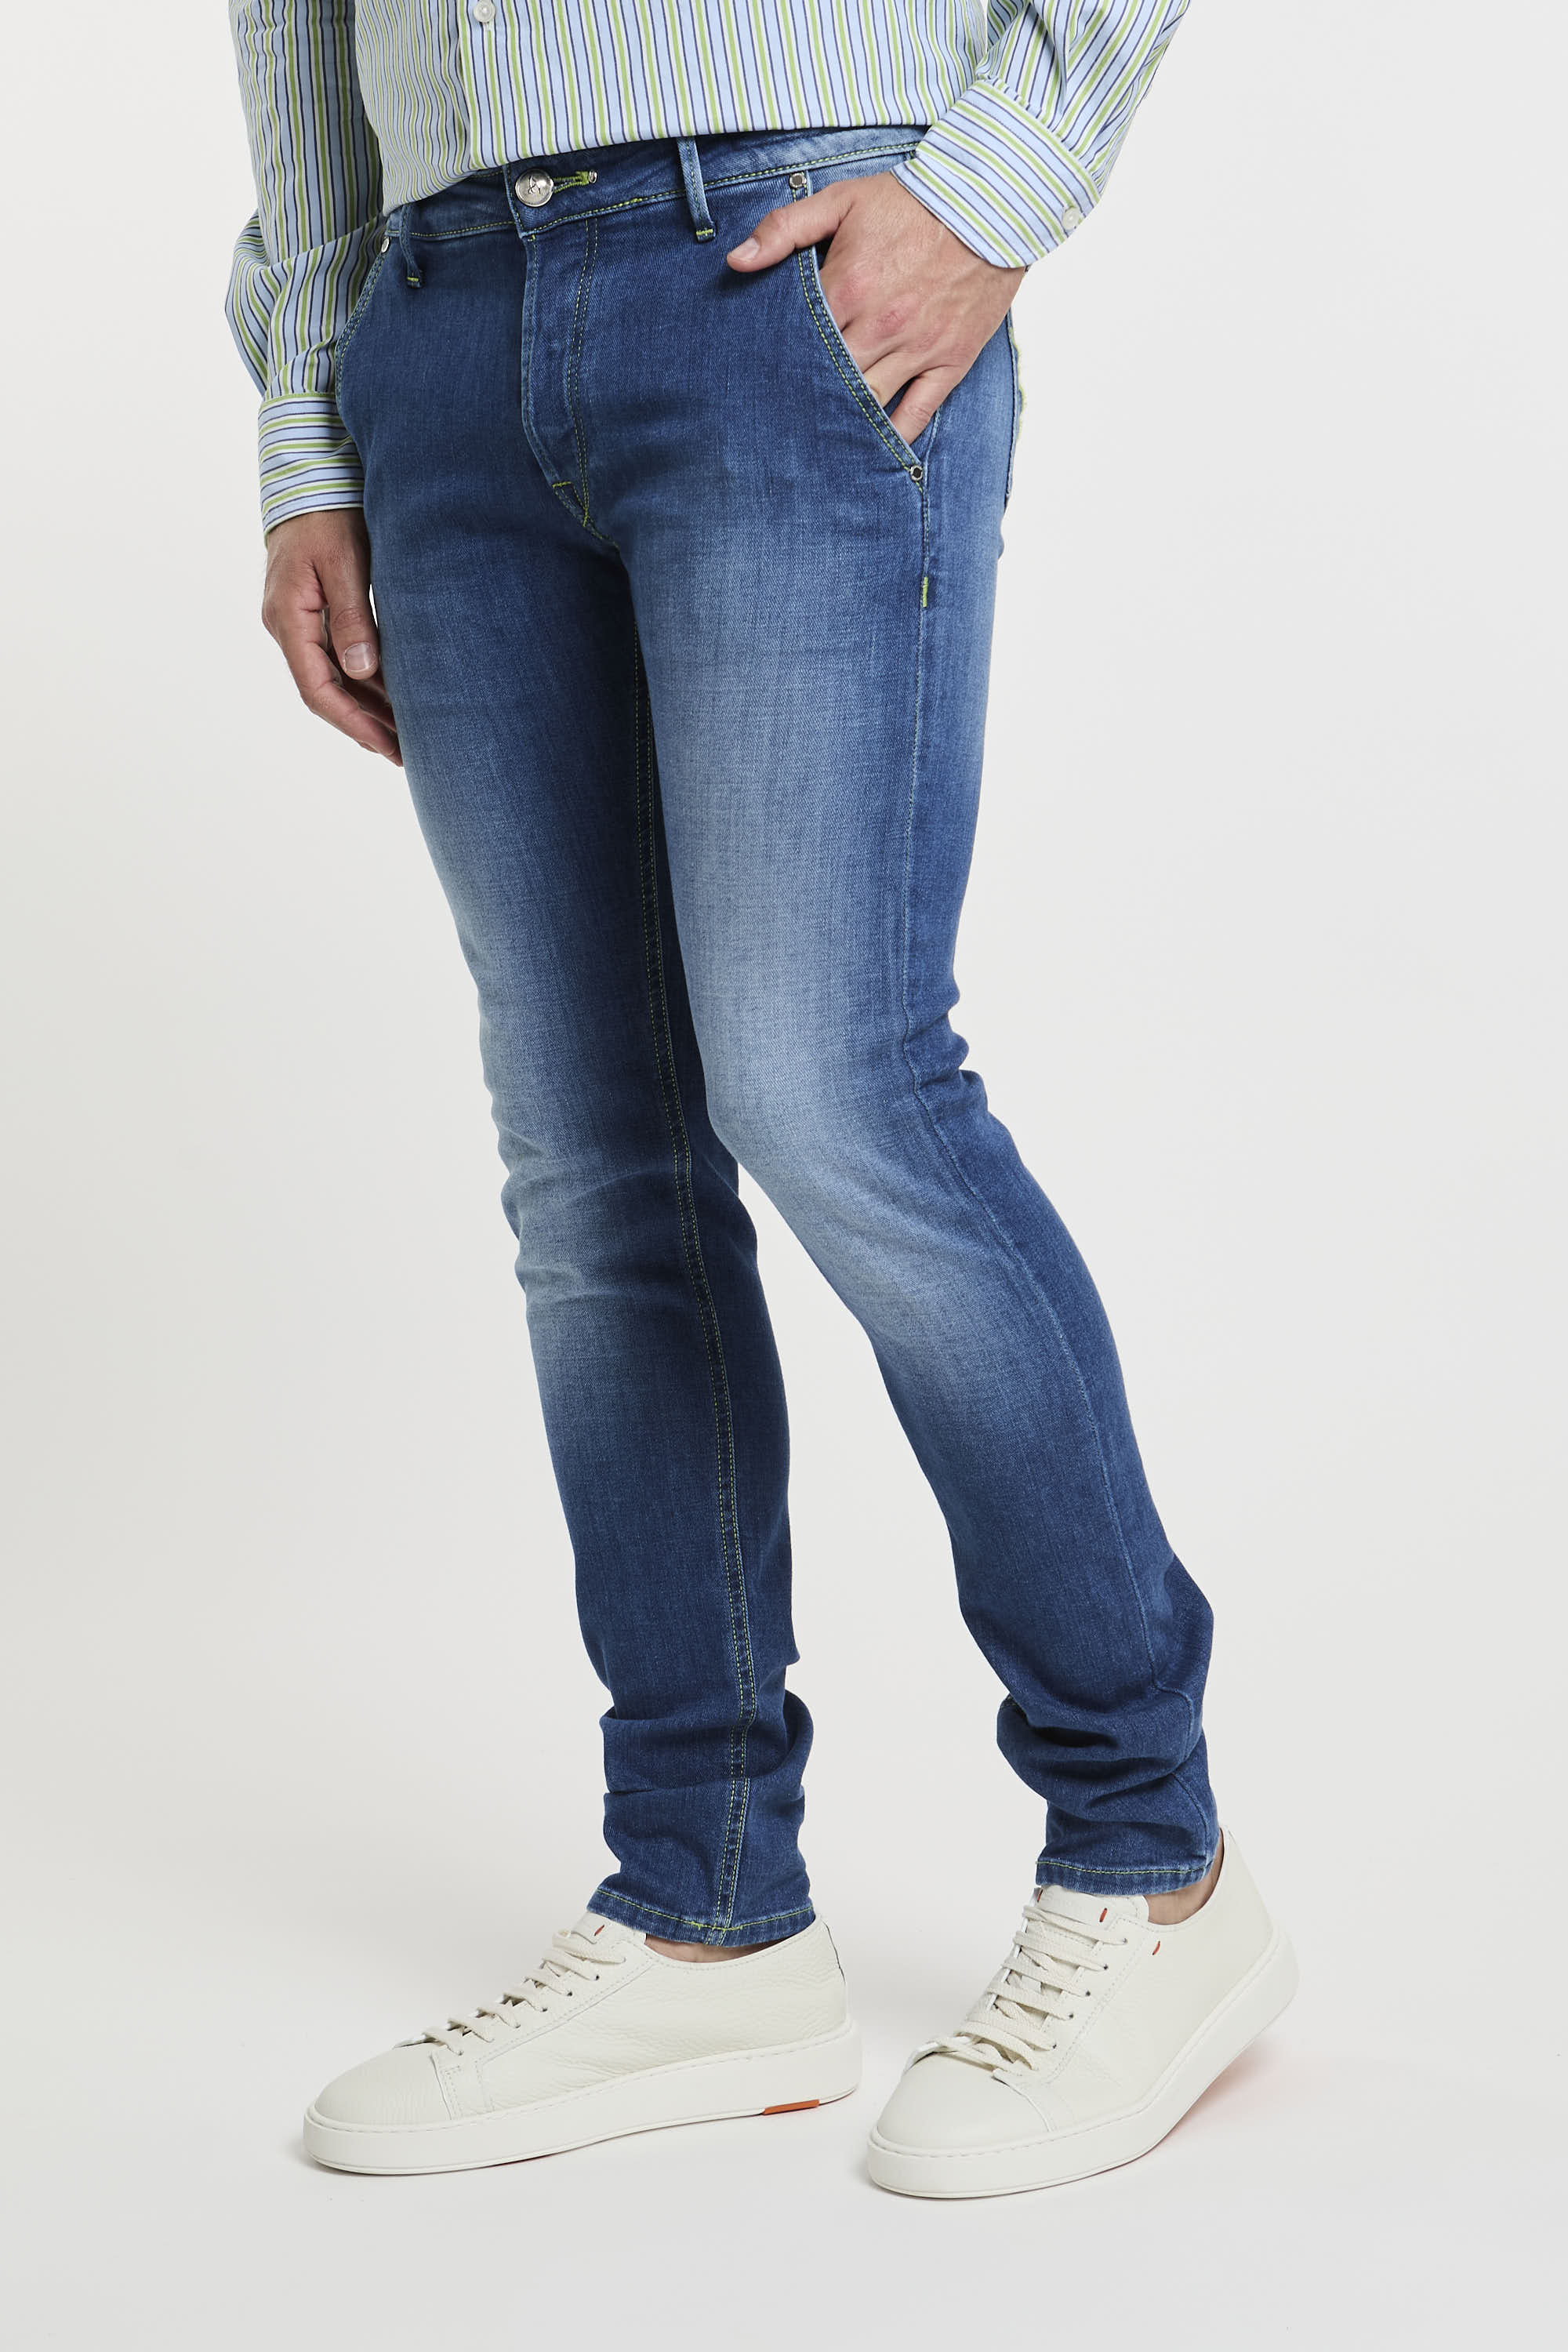 Handpicked Jeans Parma in Cotton Denim-1